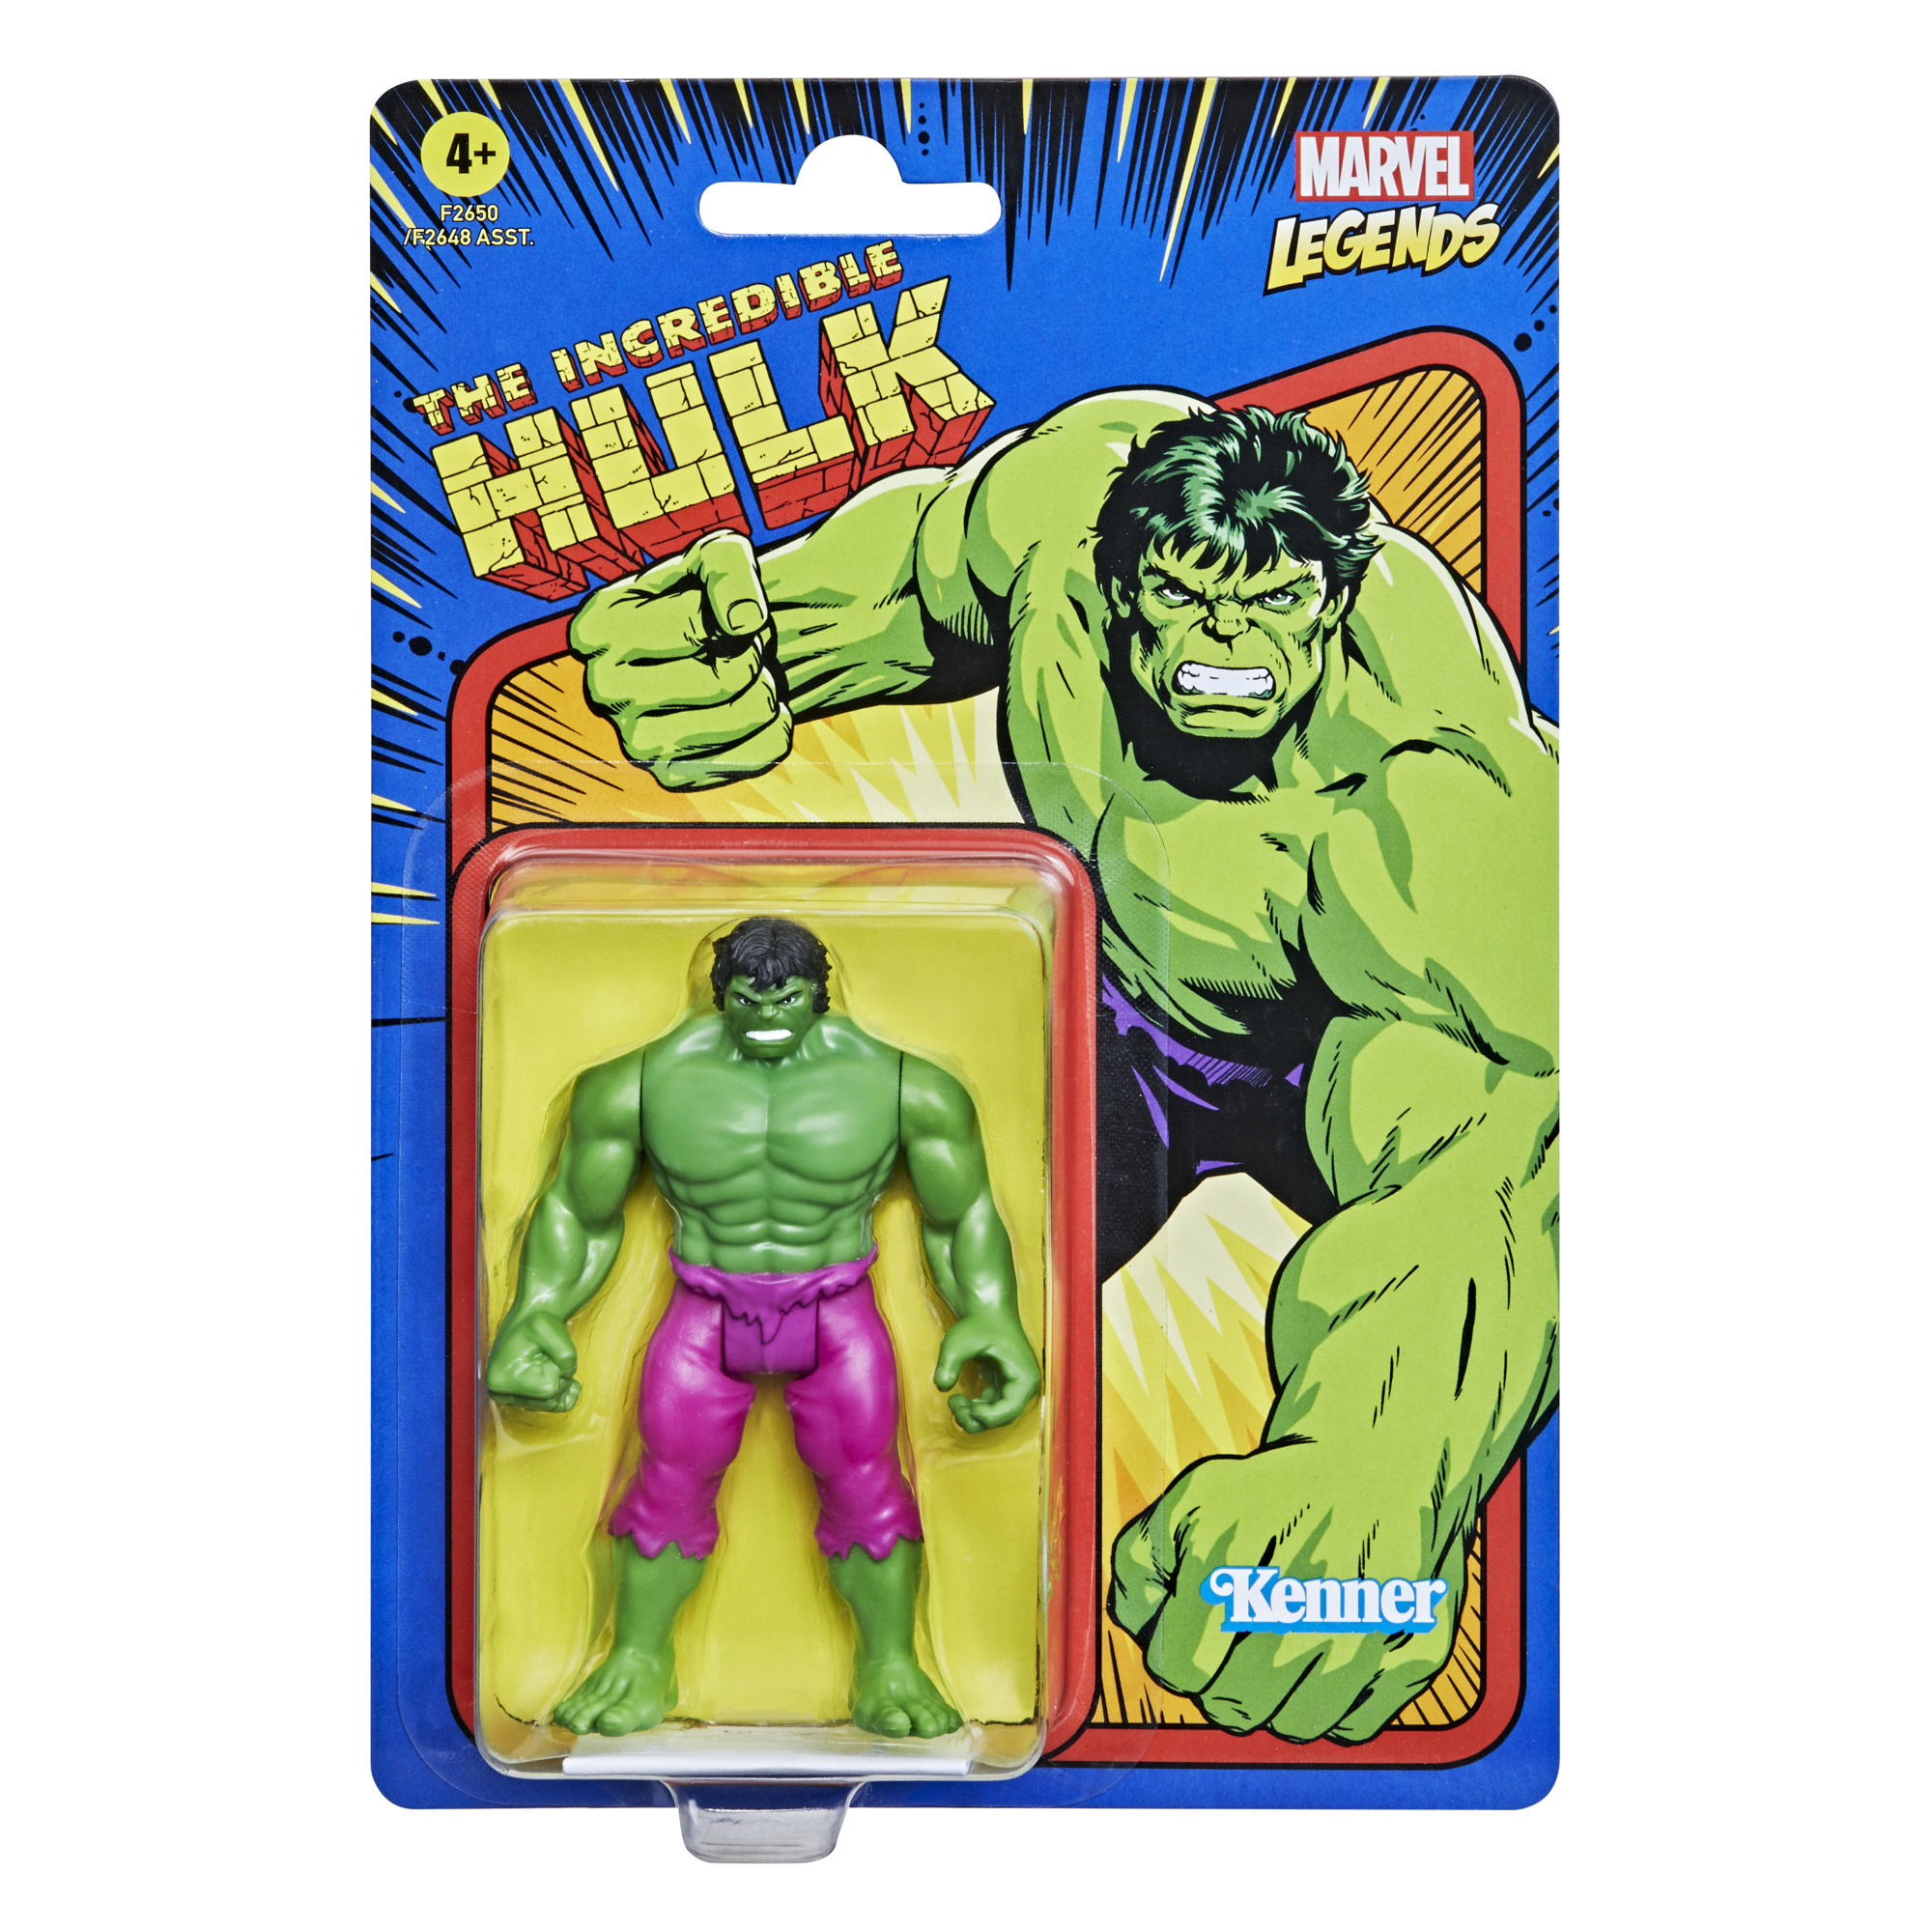 Hulk carded